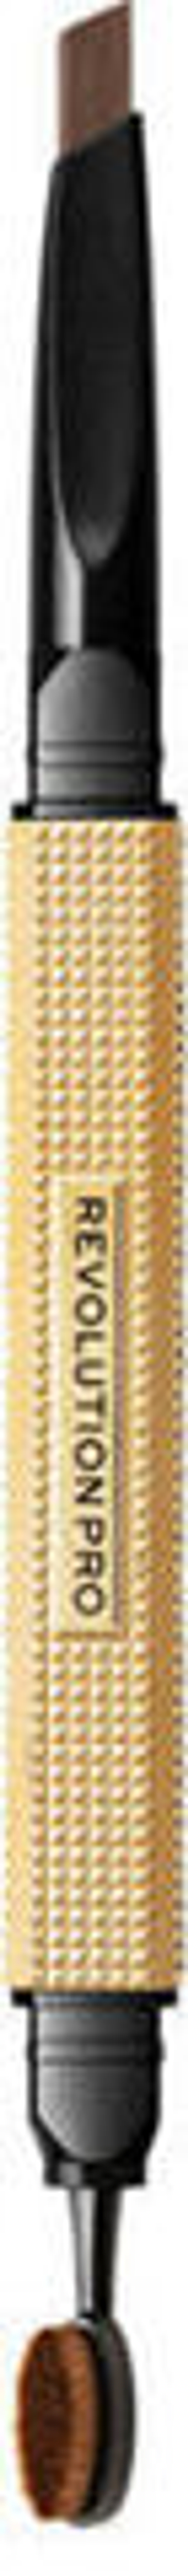 Карандаши для бровей Rockstar Dark Brown double-sided eyebrow pencil (Brow Style r) 0.25 g